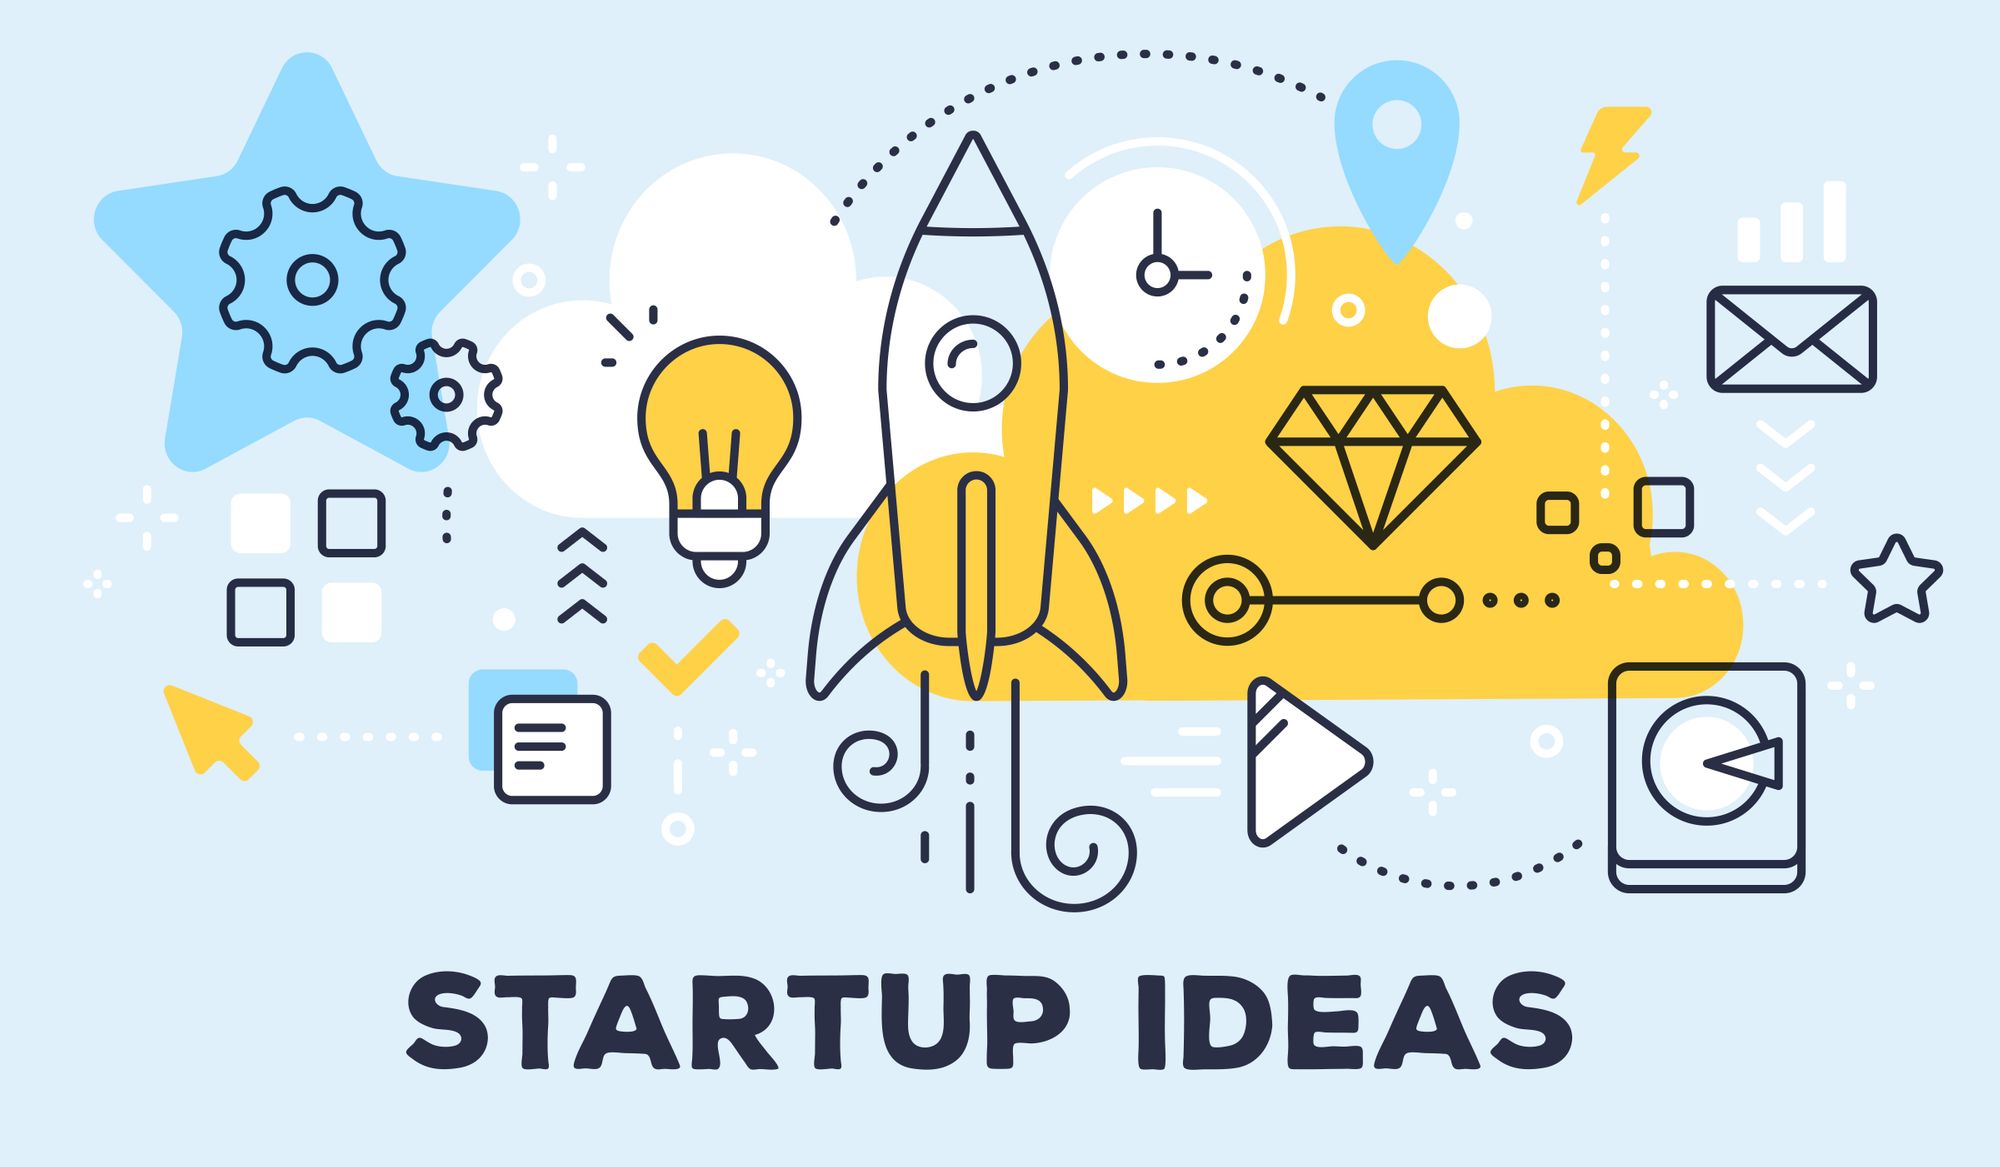 STARTUP BUSINESS IDEAS